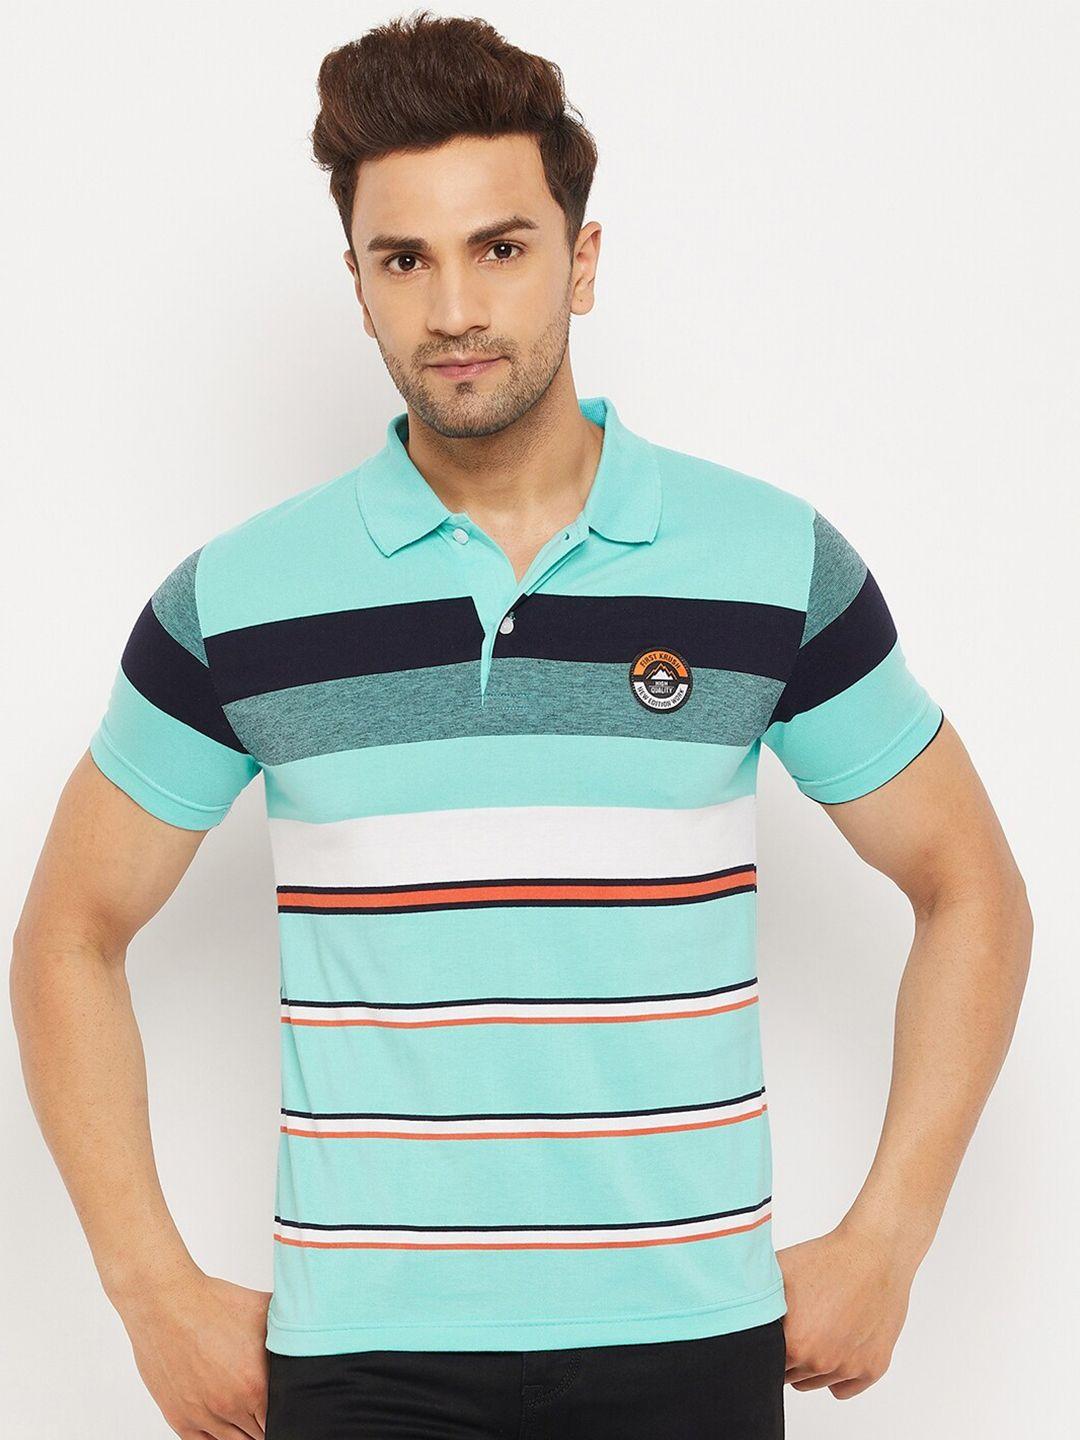 firstkrush-men-teal-&-white-striped-polo-collar-applique-t-shirt